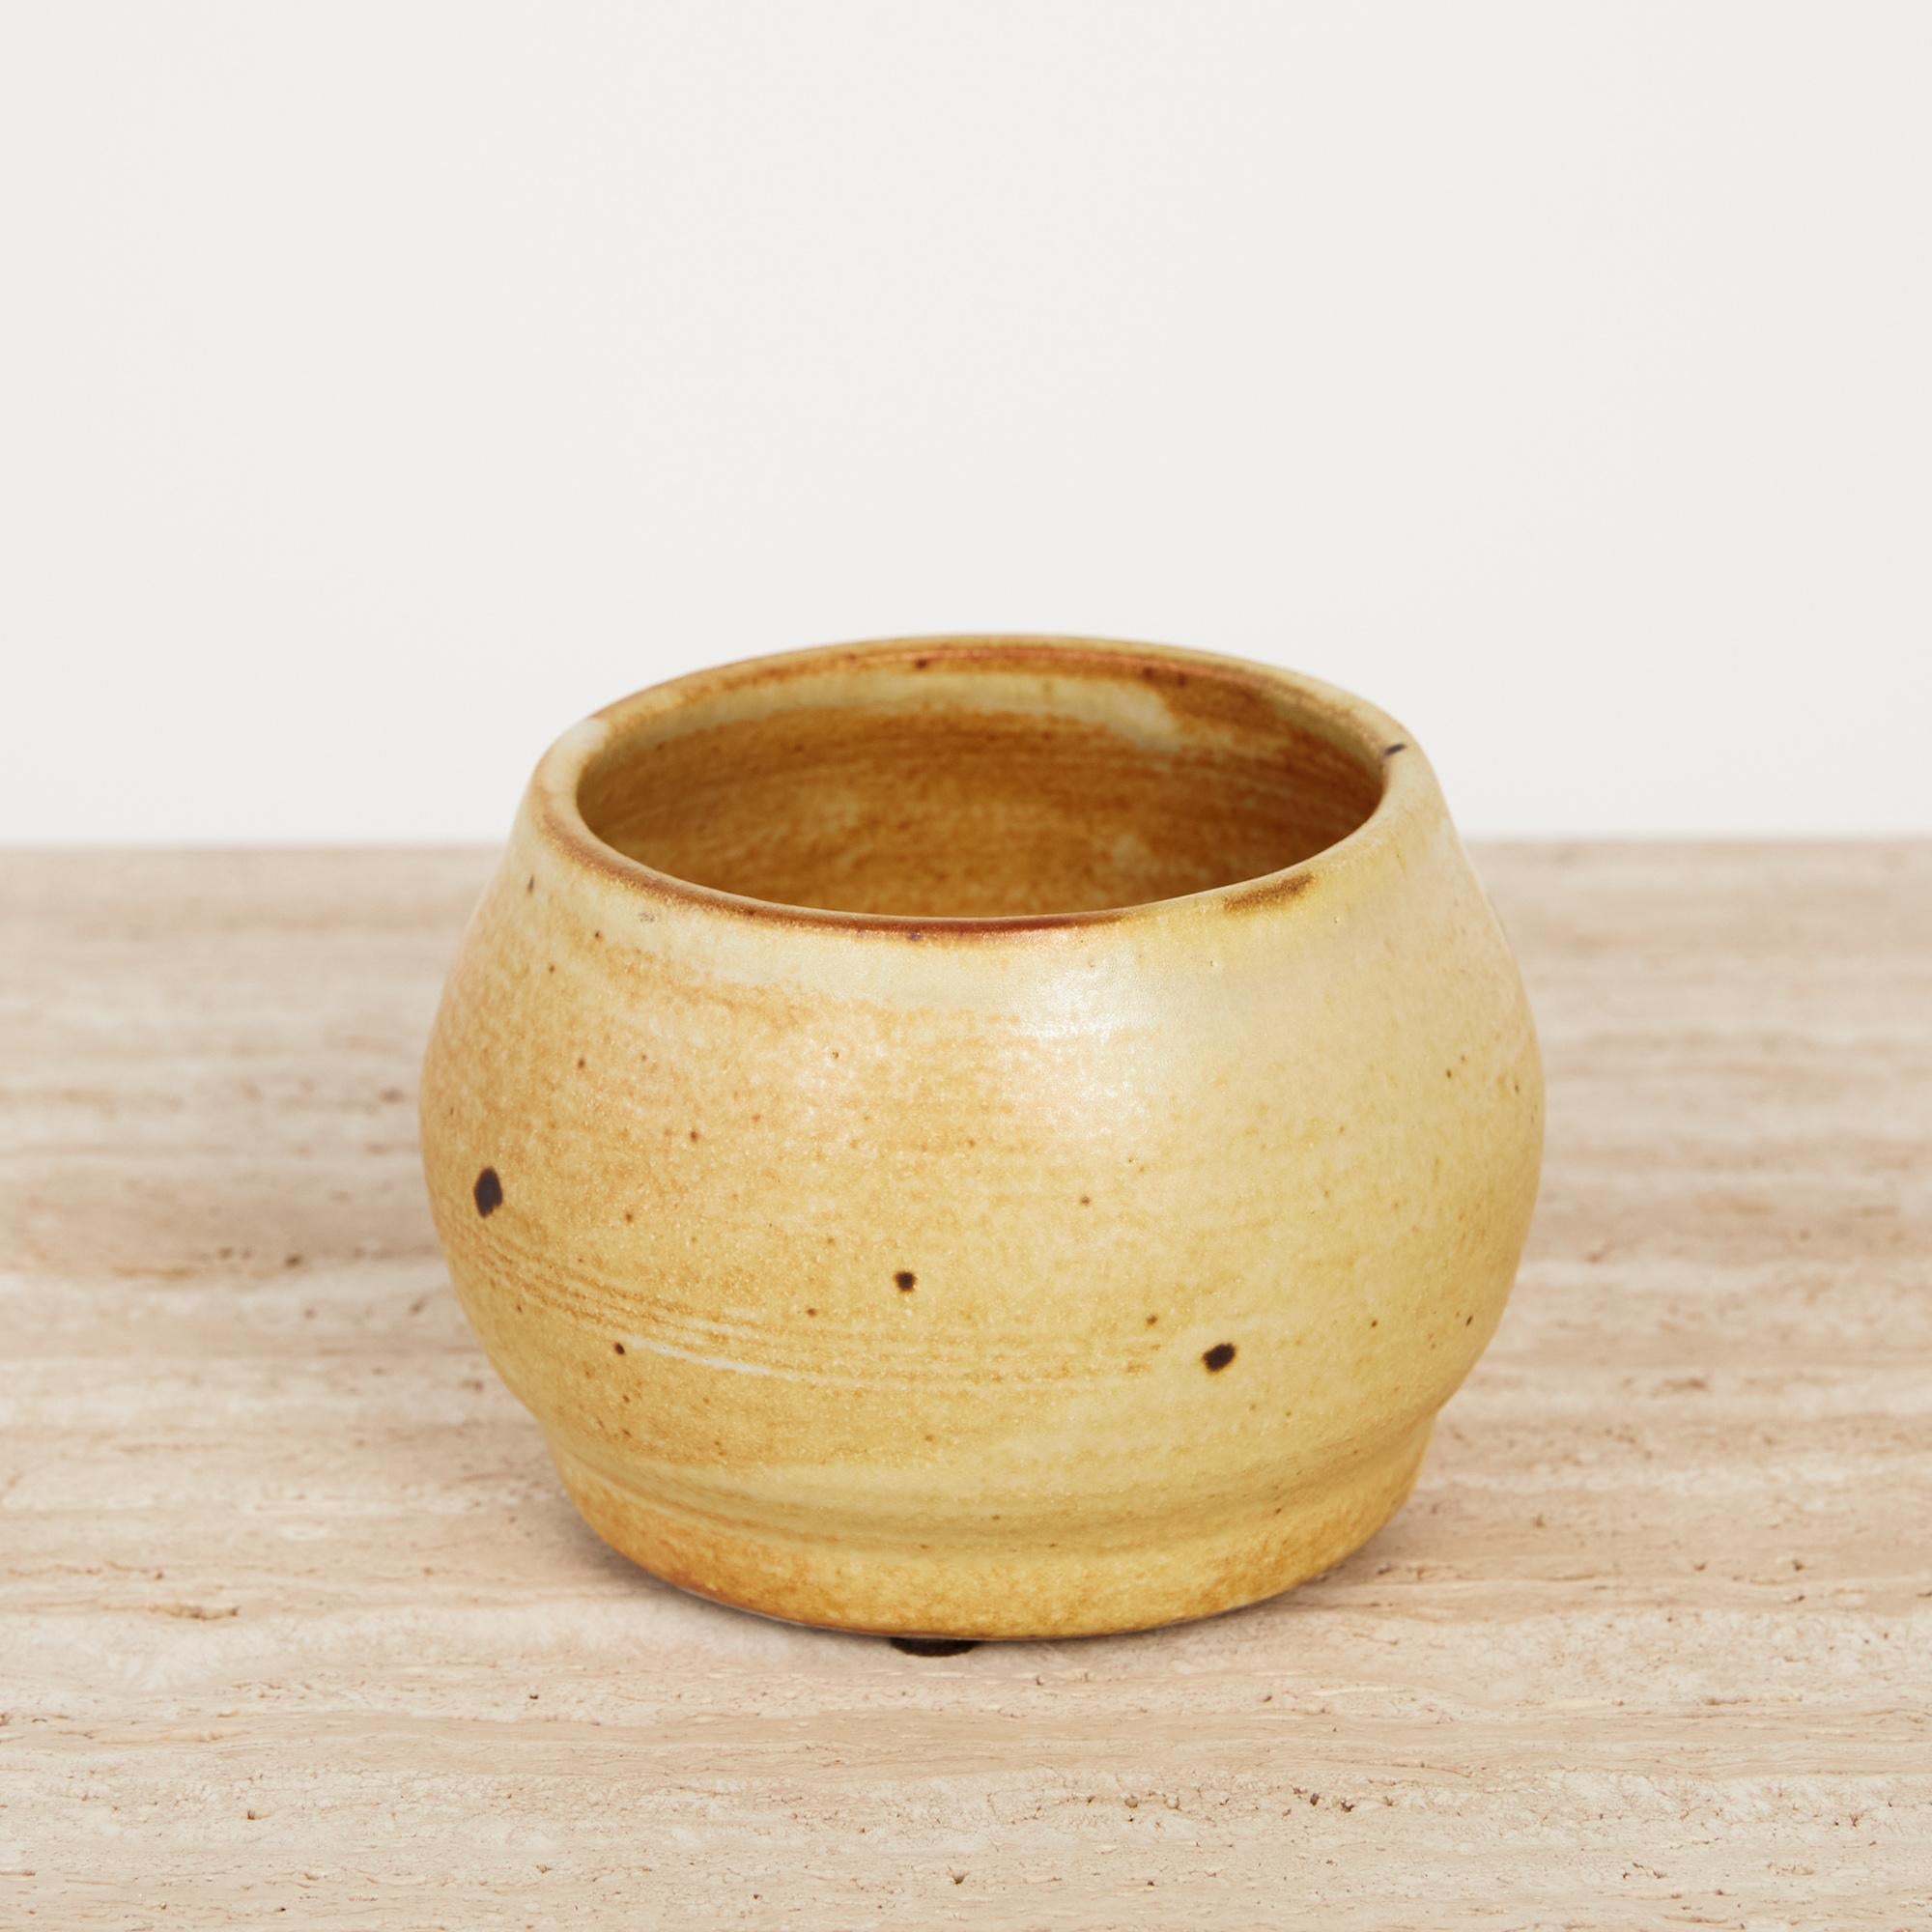 American Studio Pottery Ceramic Vessel in Yellow Glaze